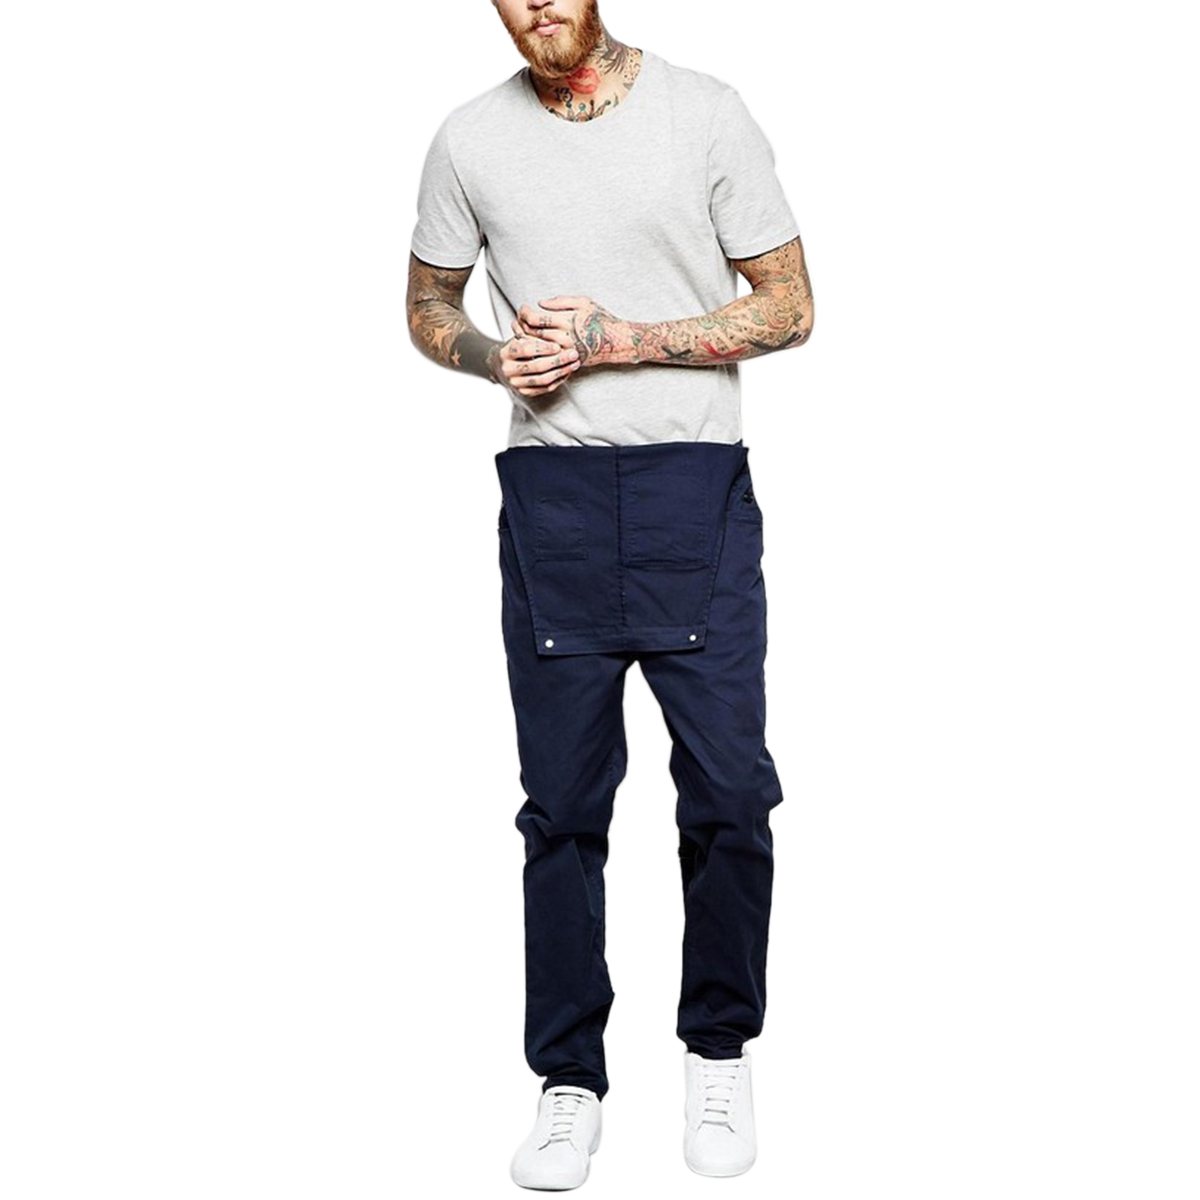 Bmnmsl Men Pants Bib Overalls Solid Color Jumpsuit Jeans Suspender Pants - image 4 of 5